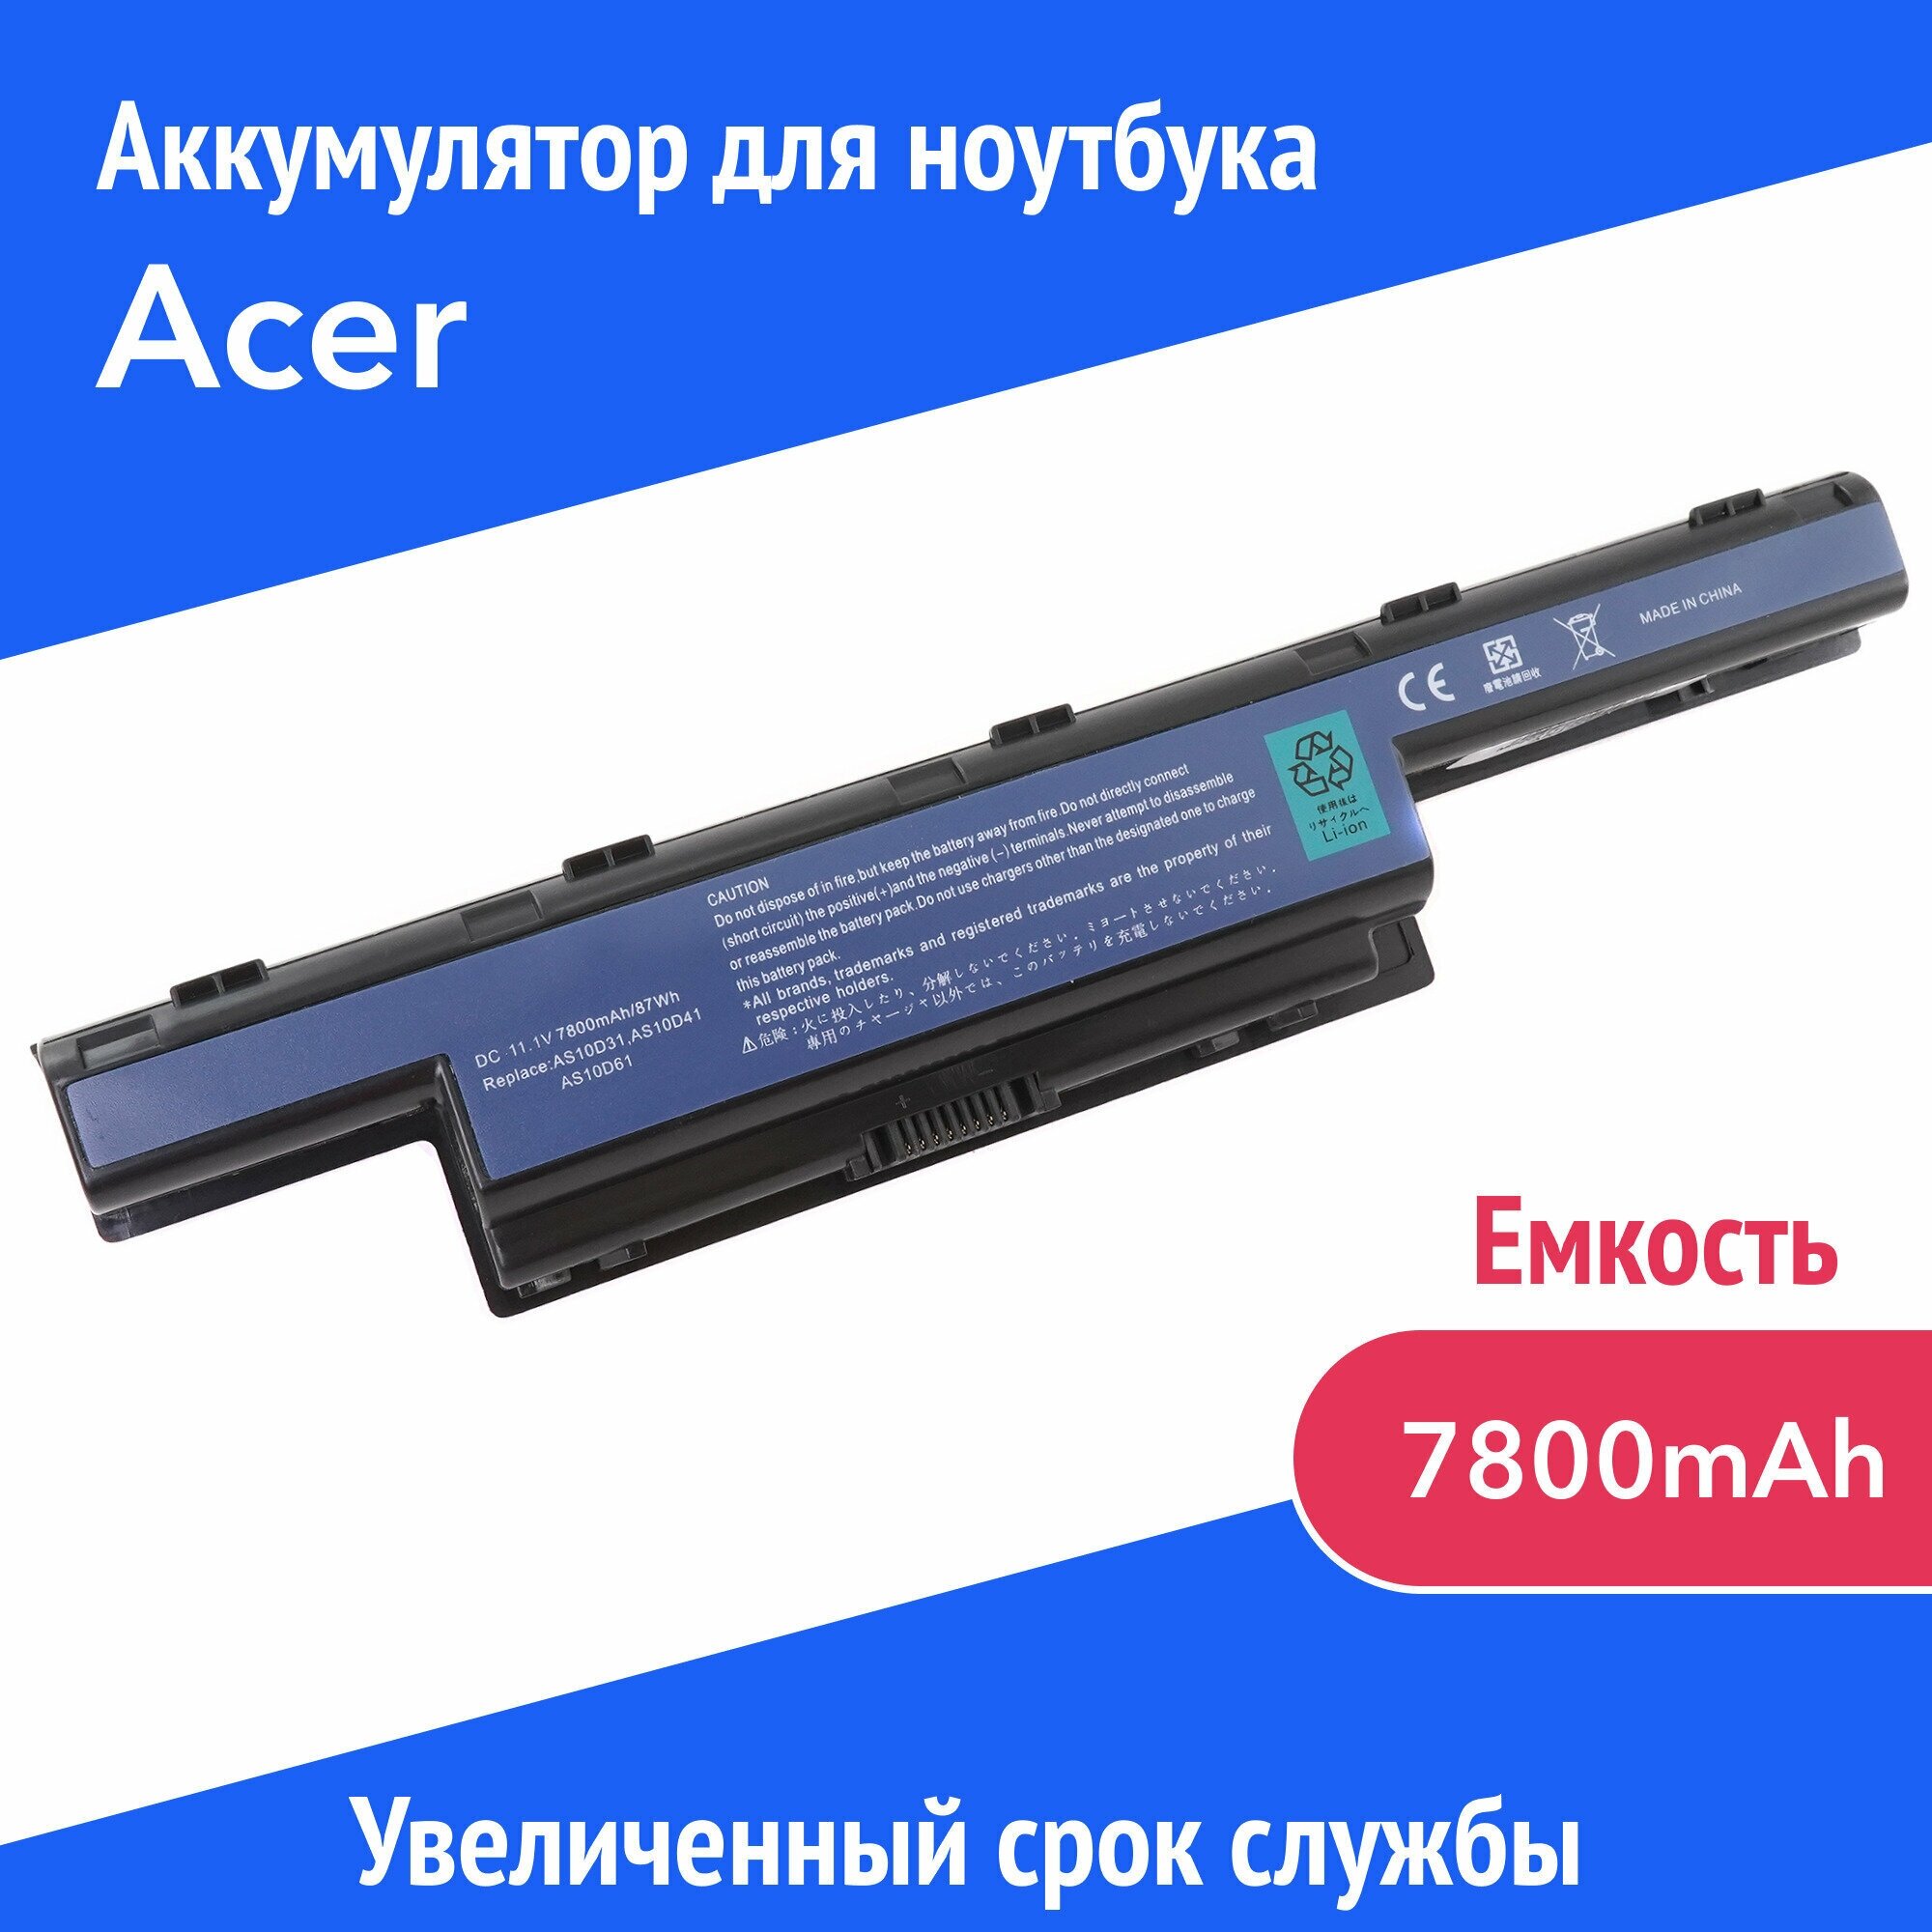 Аккумулятор AS10D31 для Acer Aspire 5551 / 5741 / 7551 / 7741 / E1-421 / E1-771 / V3-551 (AS10D51, AS10D56, AS10D61) 7800mAh